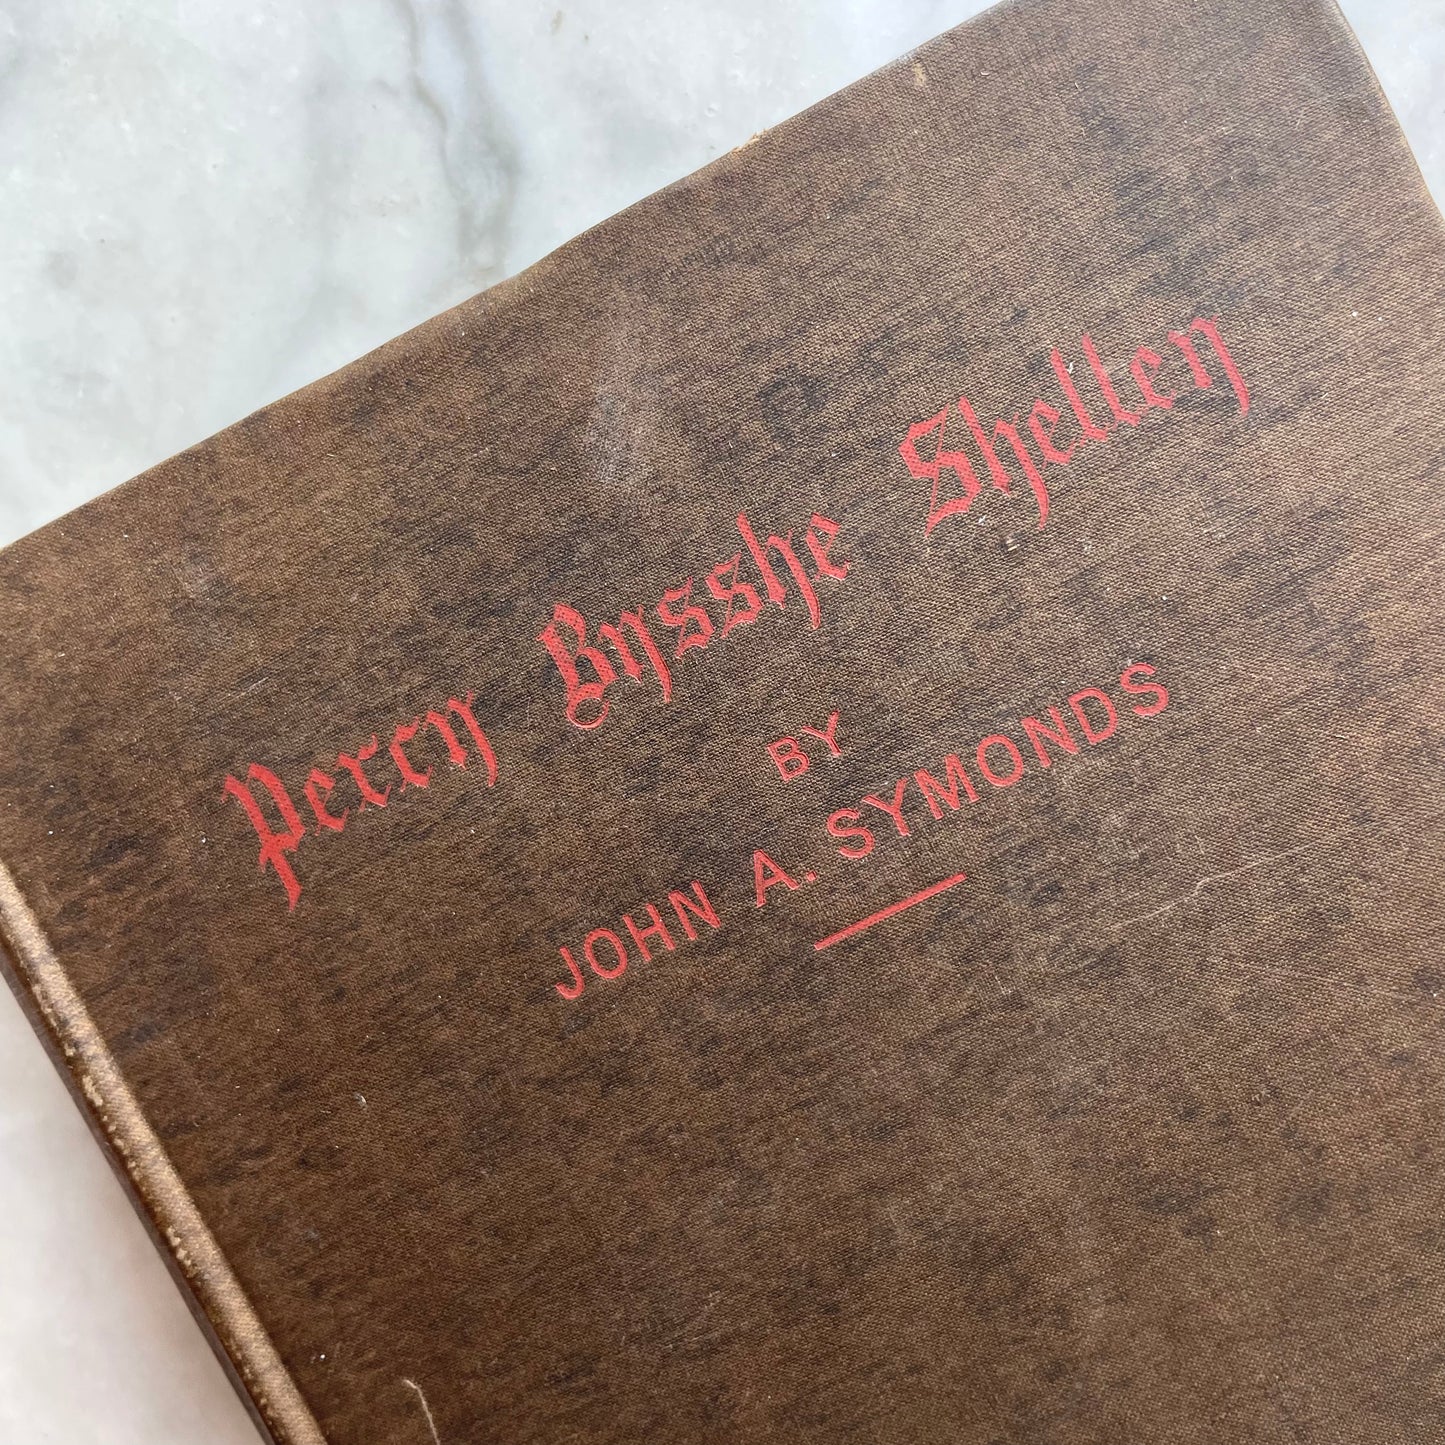 Biography of Shelley by John Addington Symonds, 1897